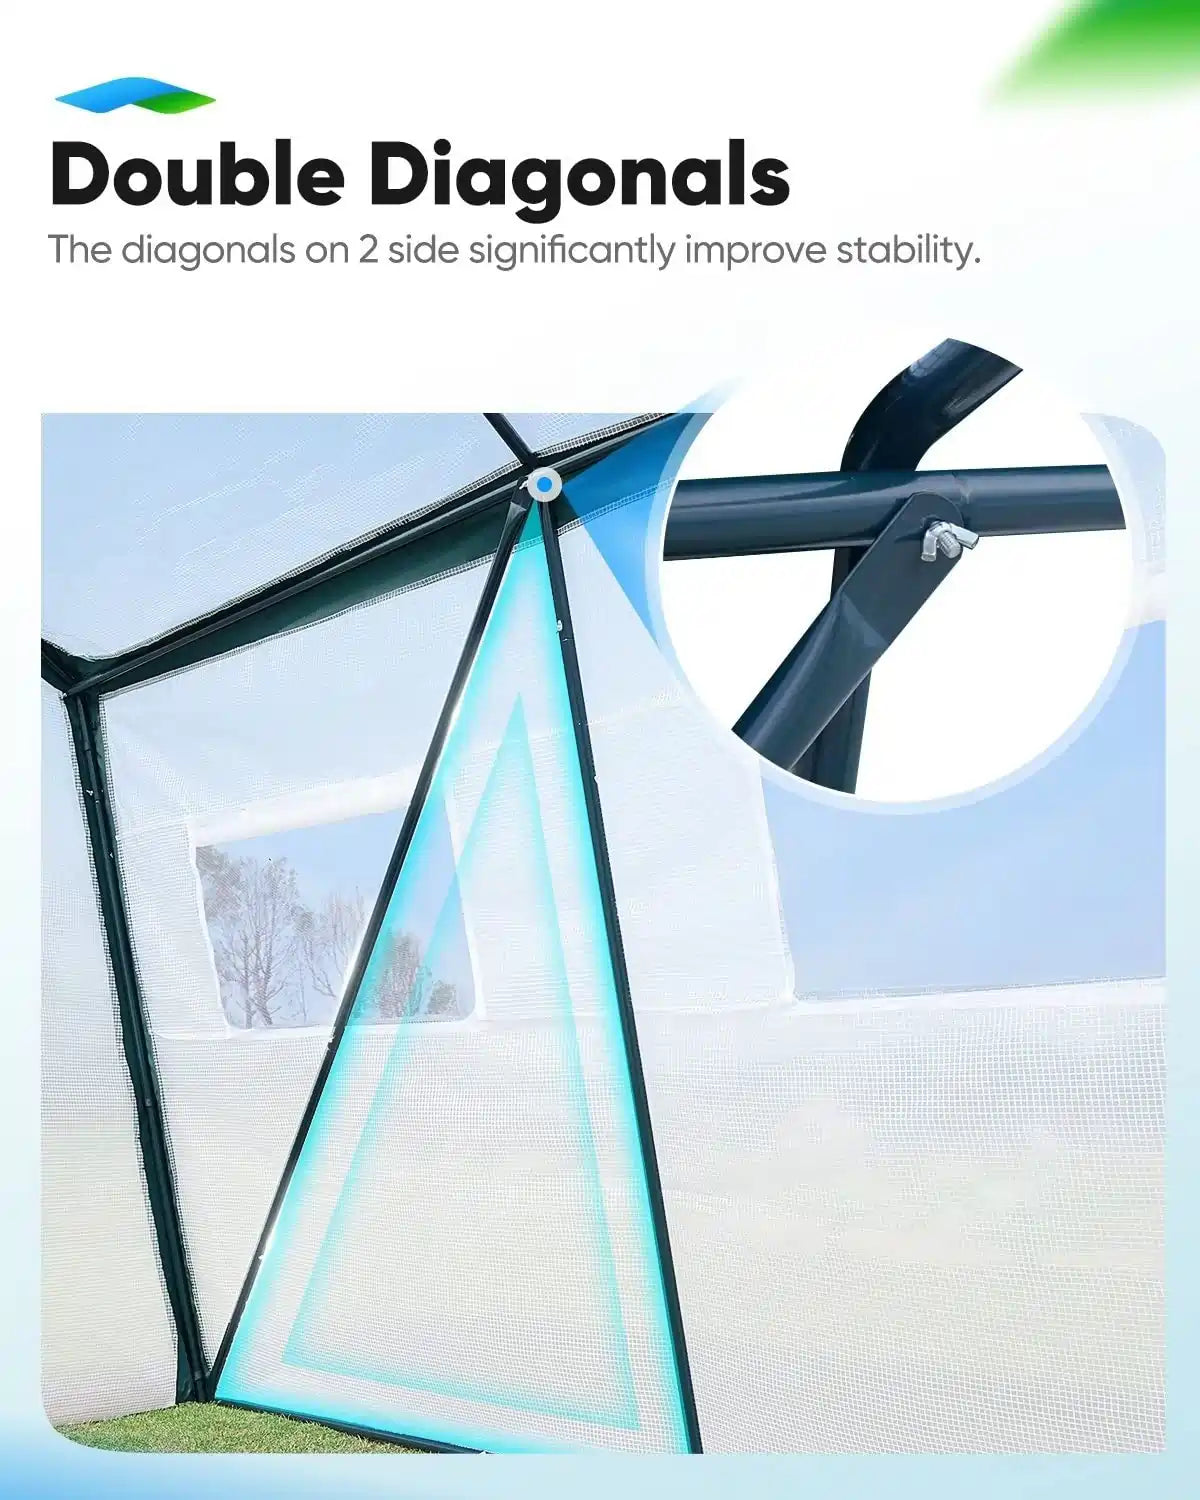 Double diagonals 